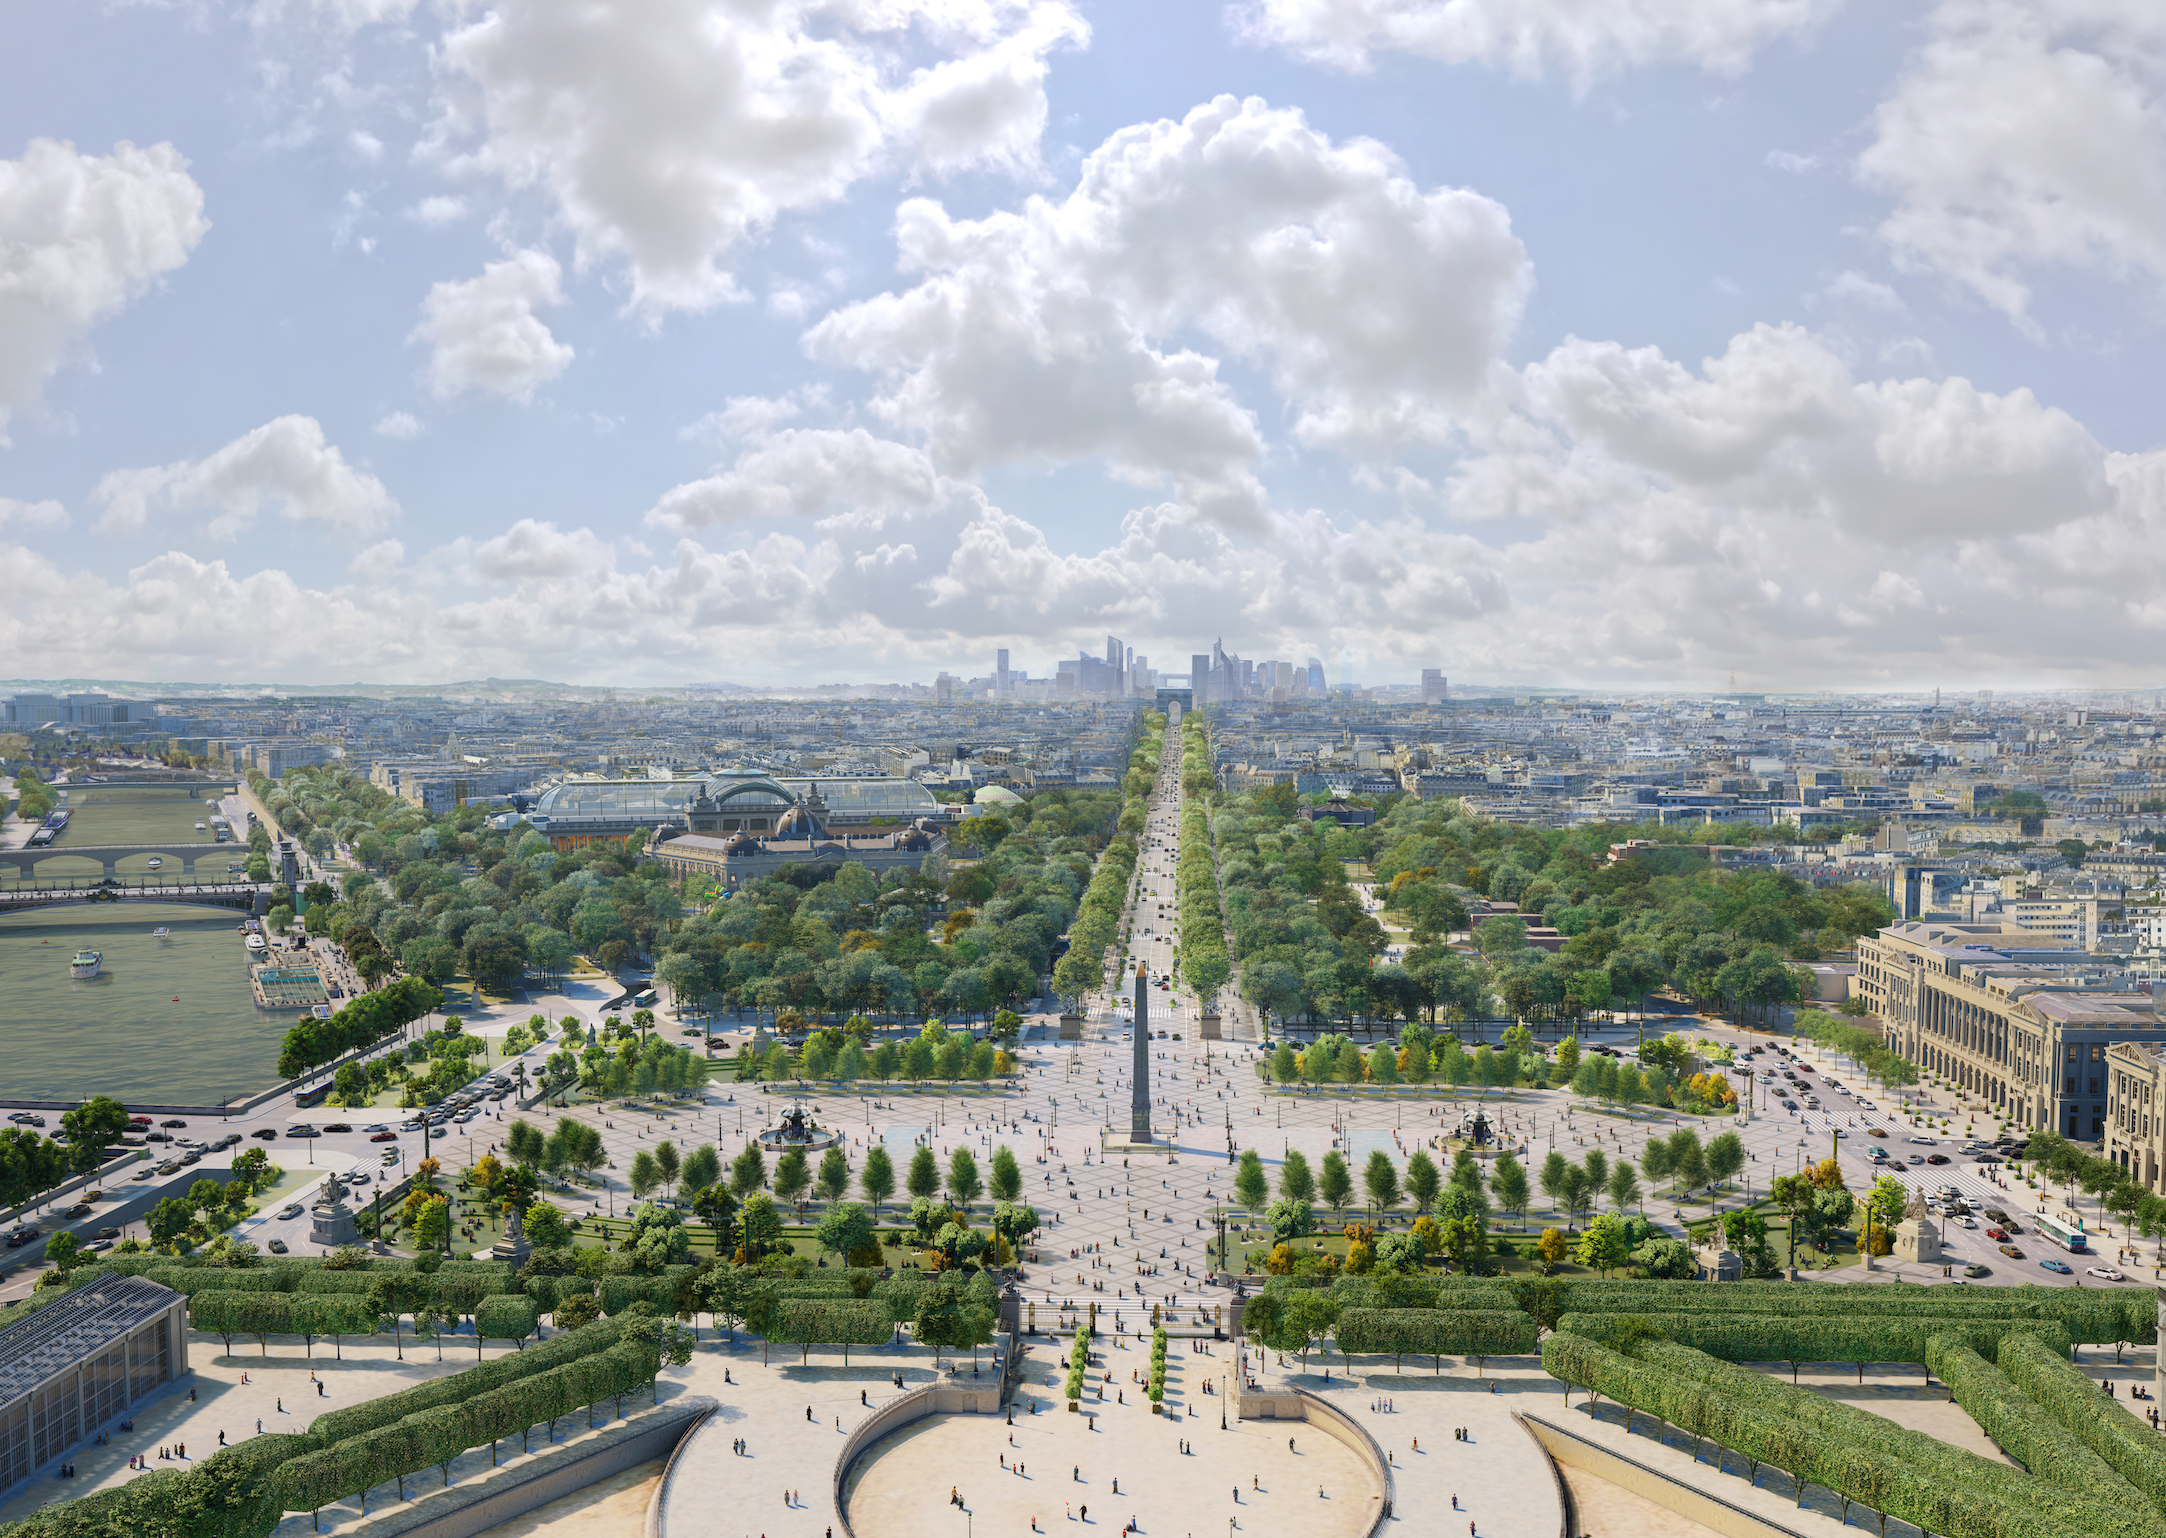 Paris agrees to turn Champs-Élysées into 'extraordinary garden', Paris